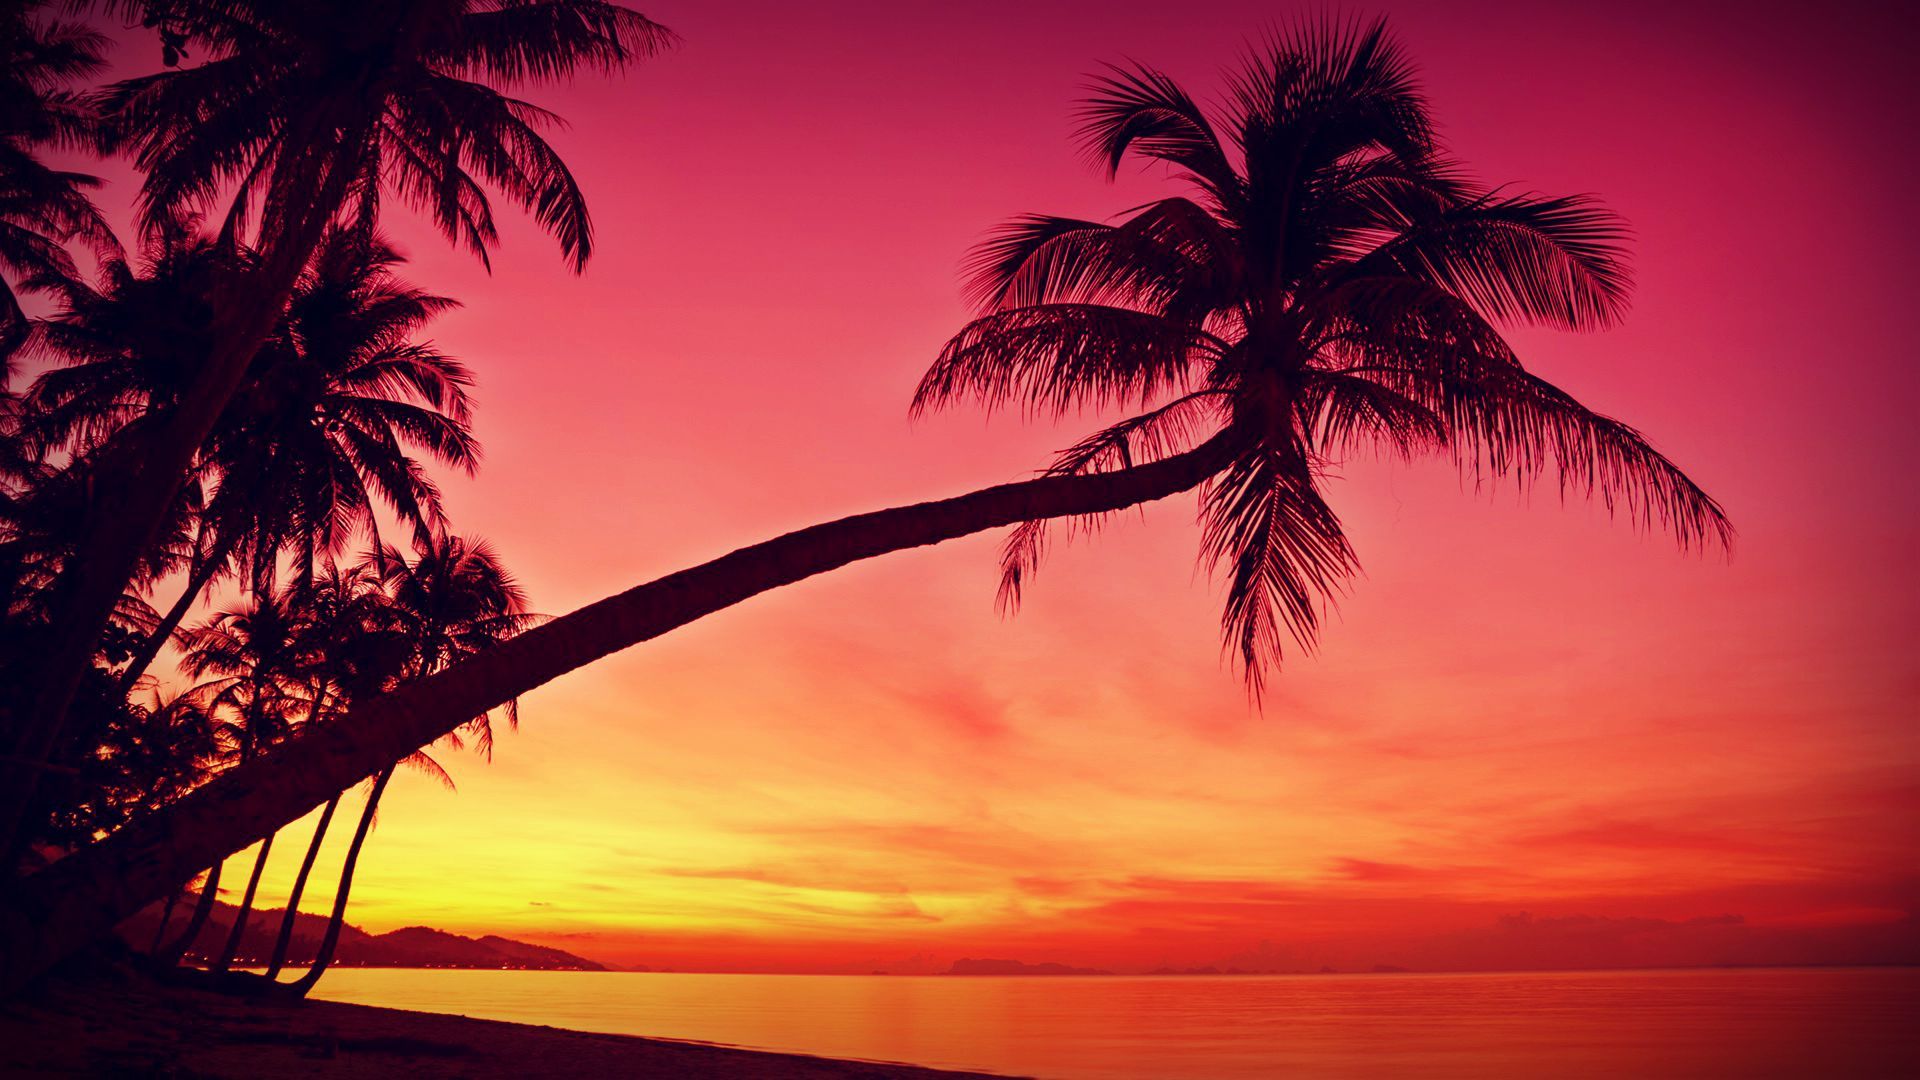 HD Tropical Sunset Palm Trees Silhouette Beach Wallpaper